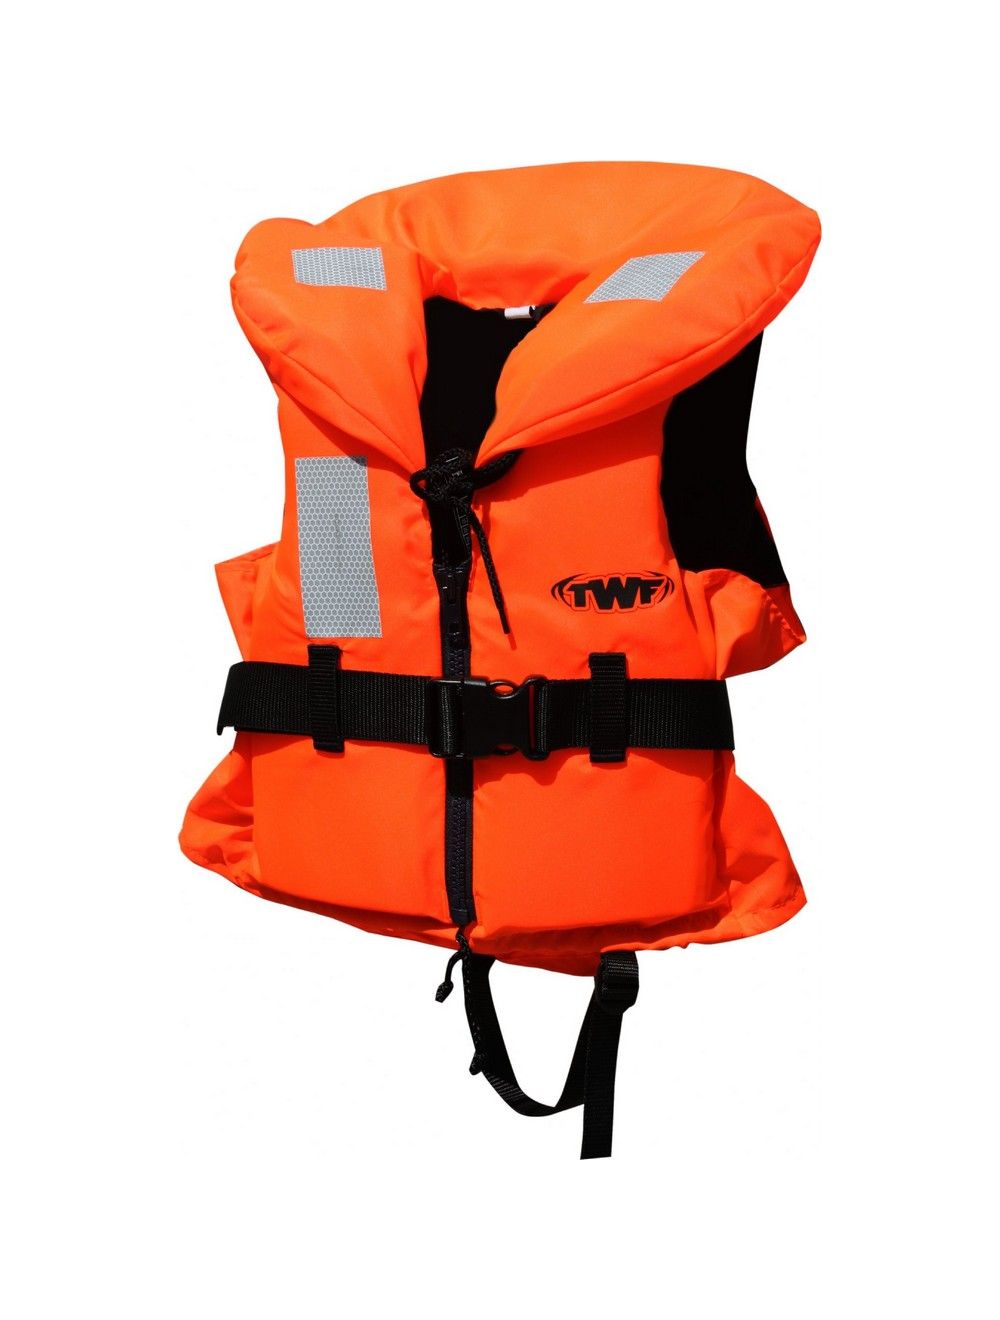 TWF Kid's 100N Freedom Life Jacket - Orange/Black - Size: 20 - 30 kg